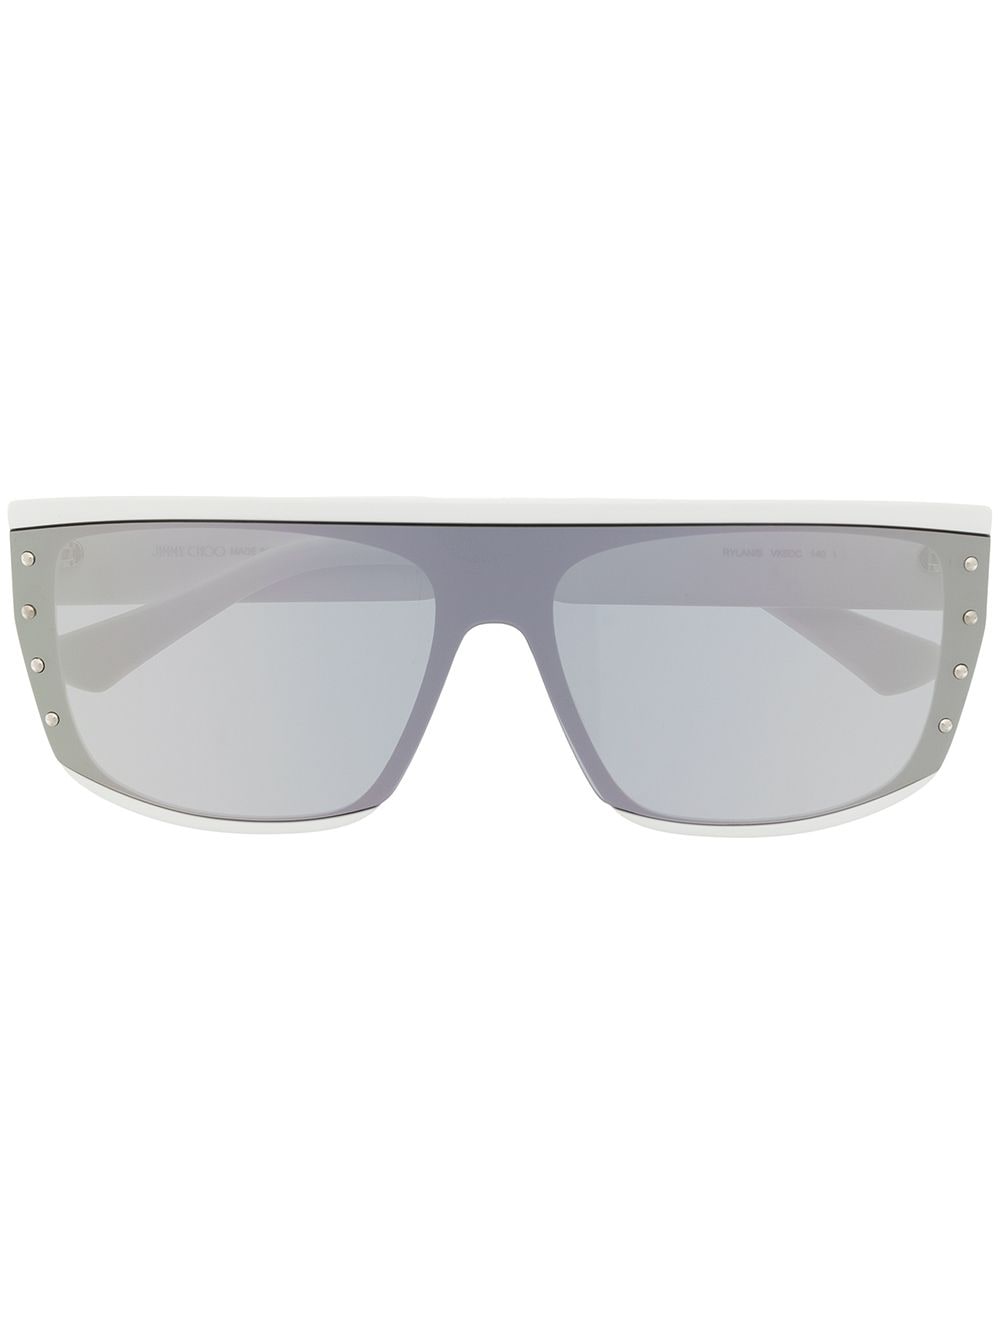 jimmy choo eyewear rylan pilot sunglasses - white